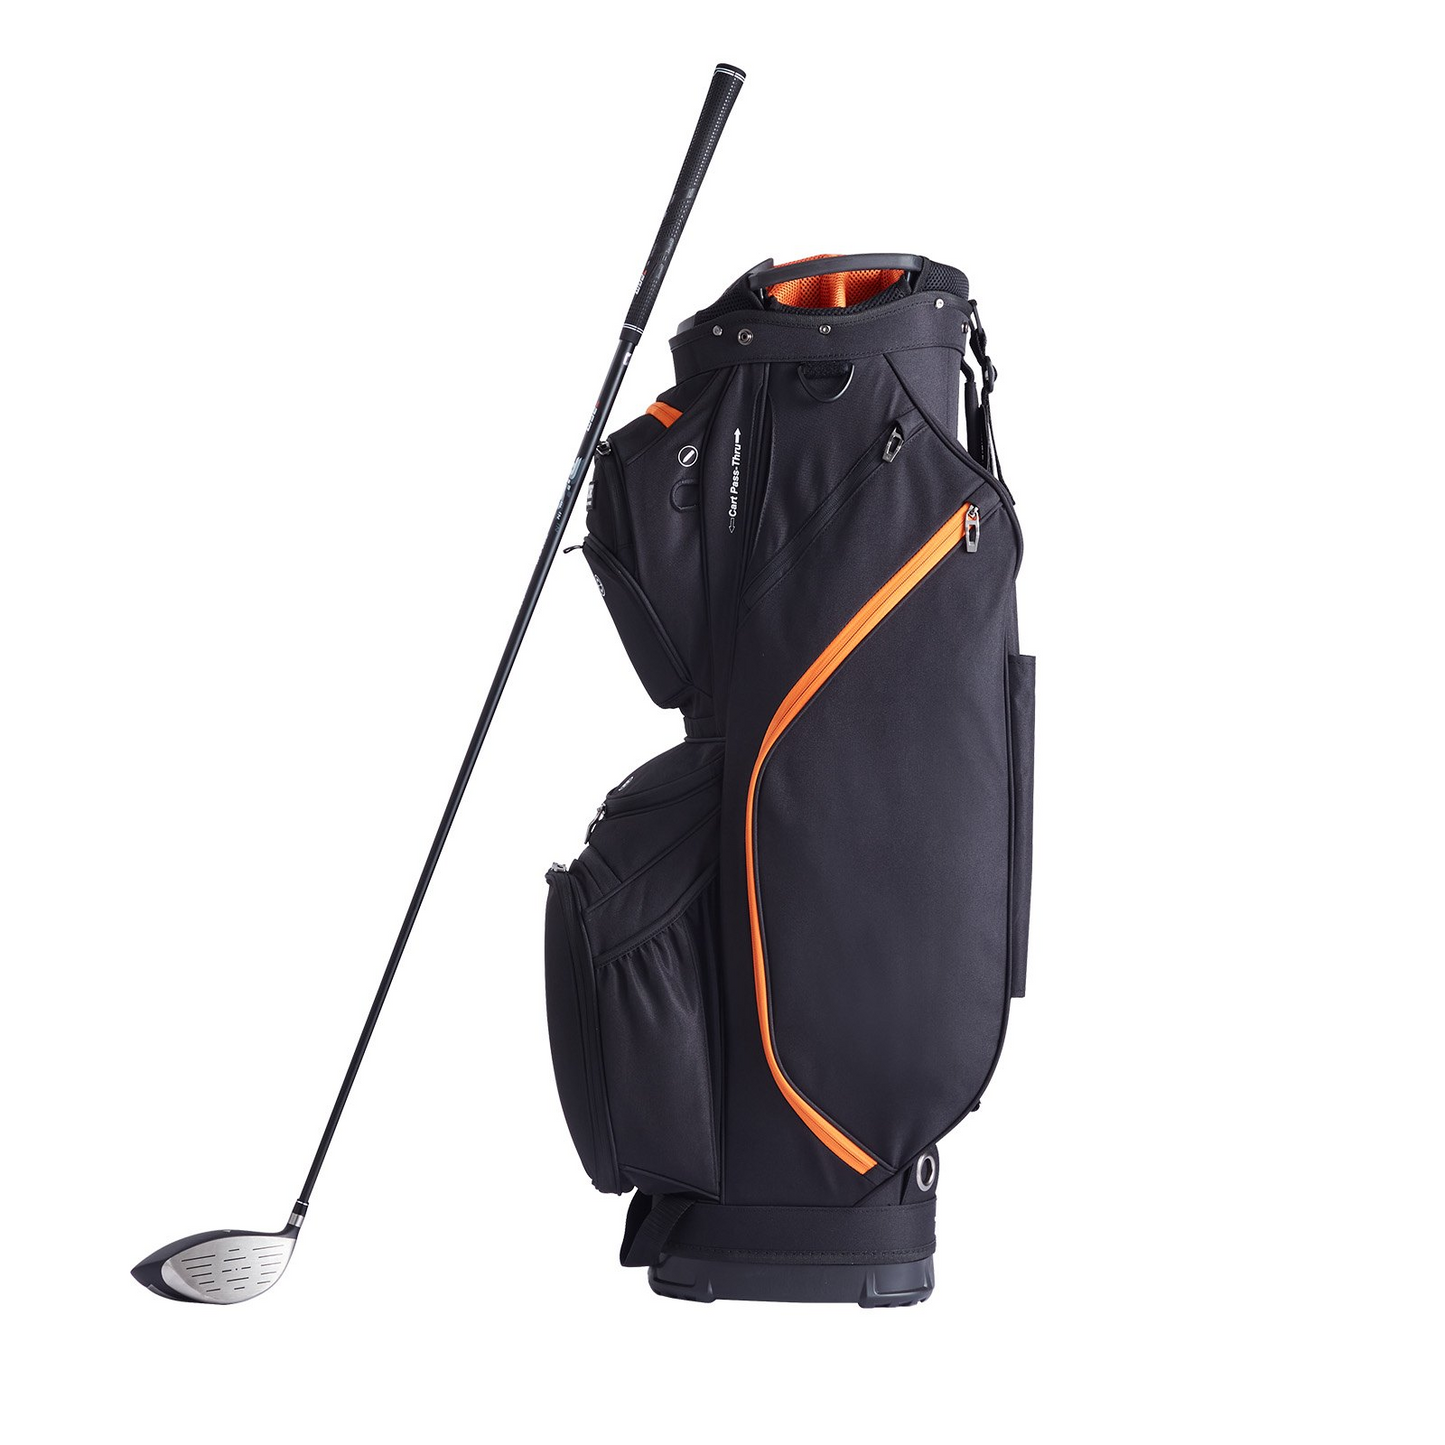 VEVOR Golf Cart Bag with 14 Way Organizer Divider Top, 36” 13 Pockets Premium Cart Bag, Durable Golf Bags with Handles & Dust Cover & Detachable Straps for Men & Women, Black & Orange, Goodies N Stuff